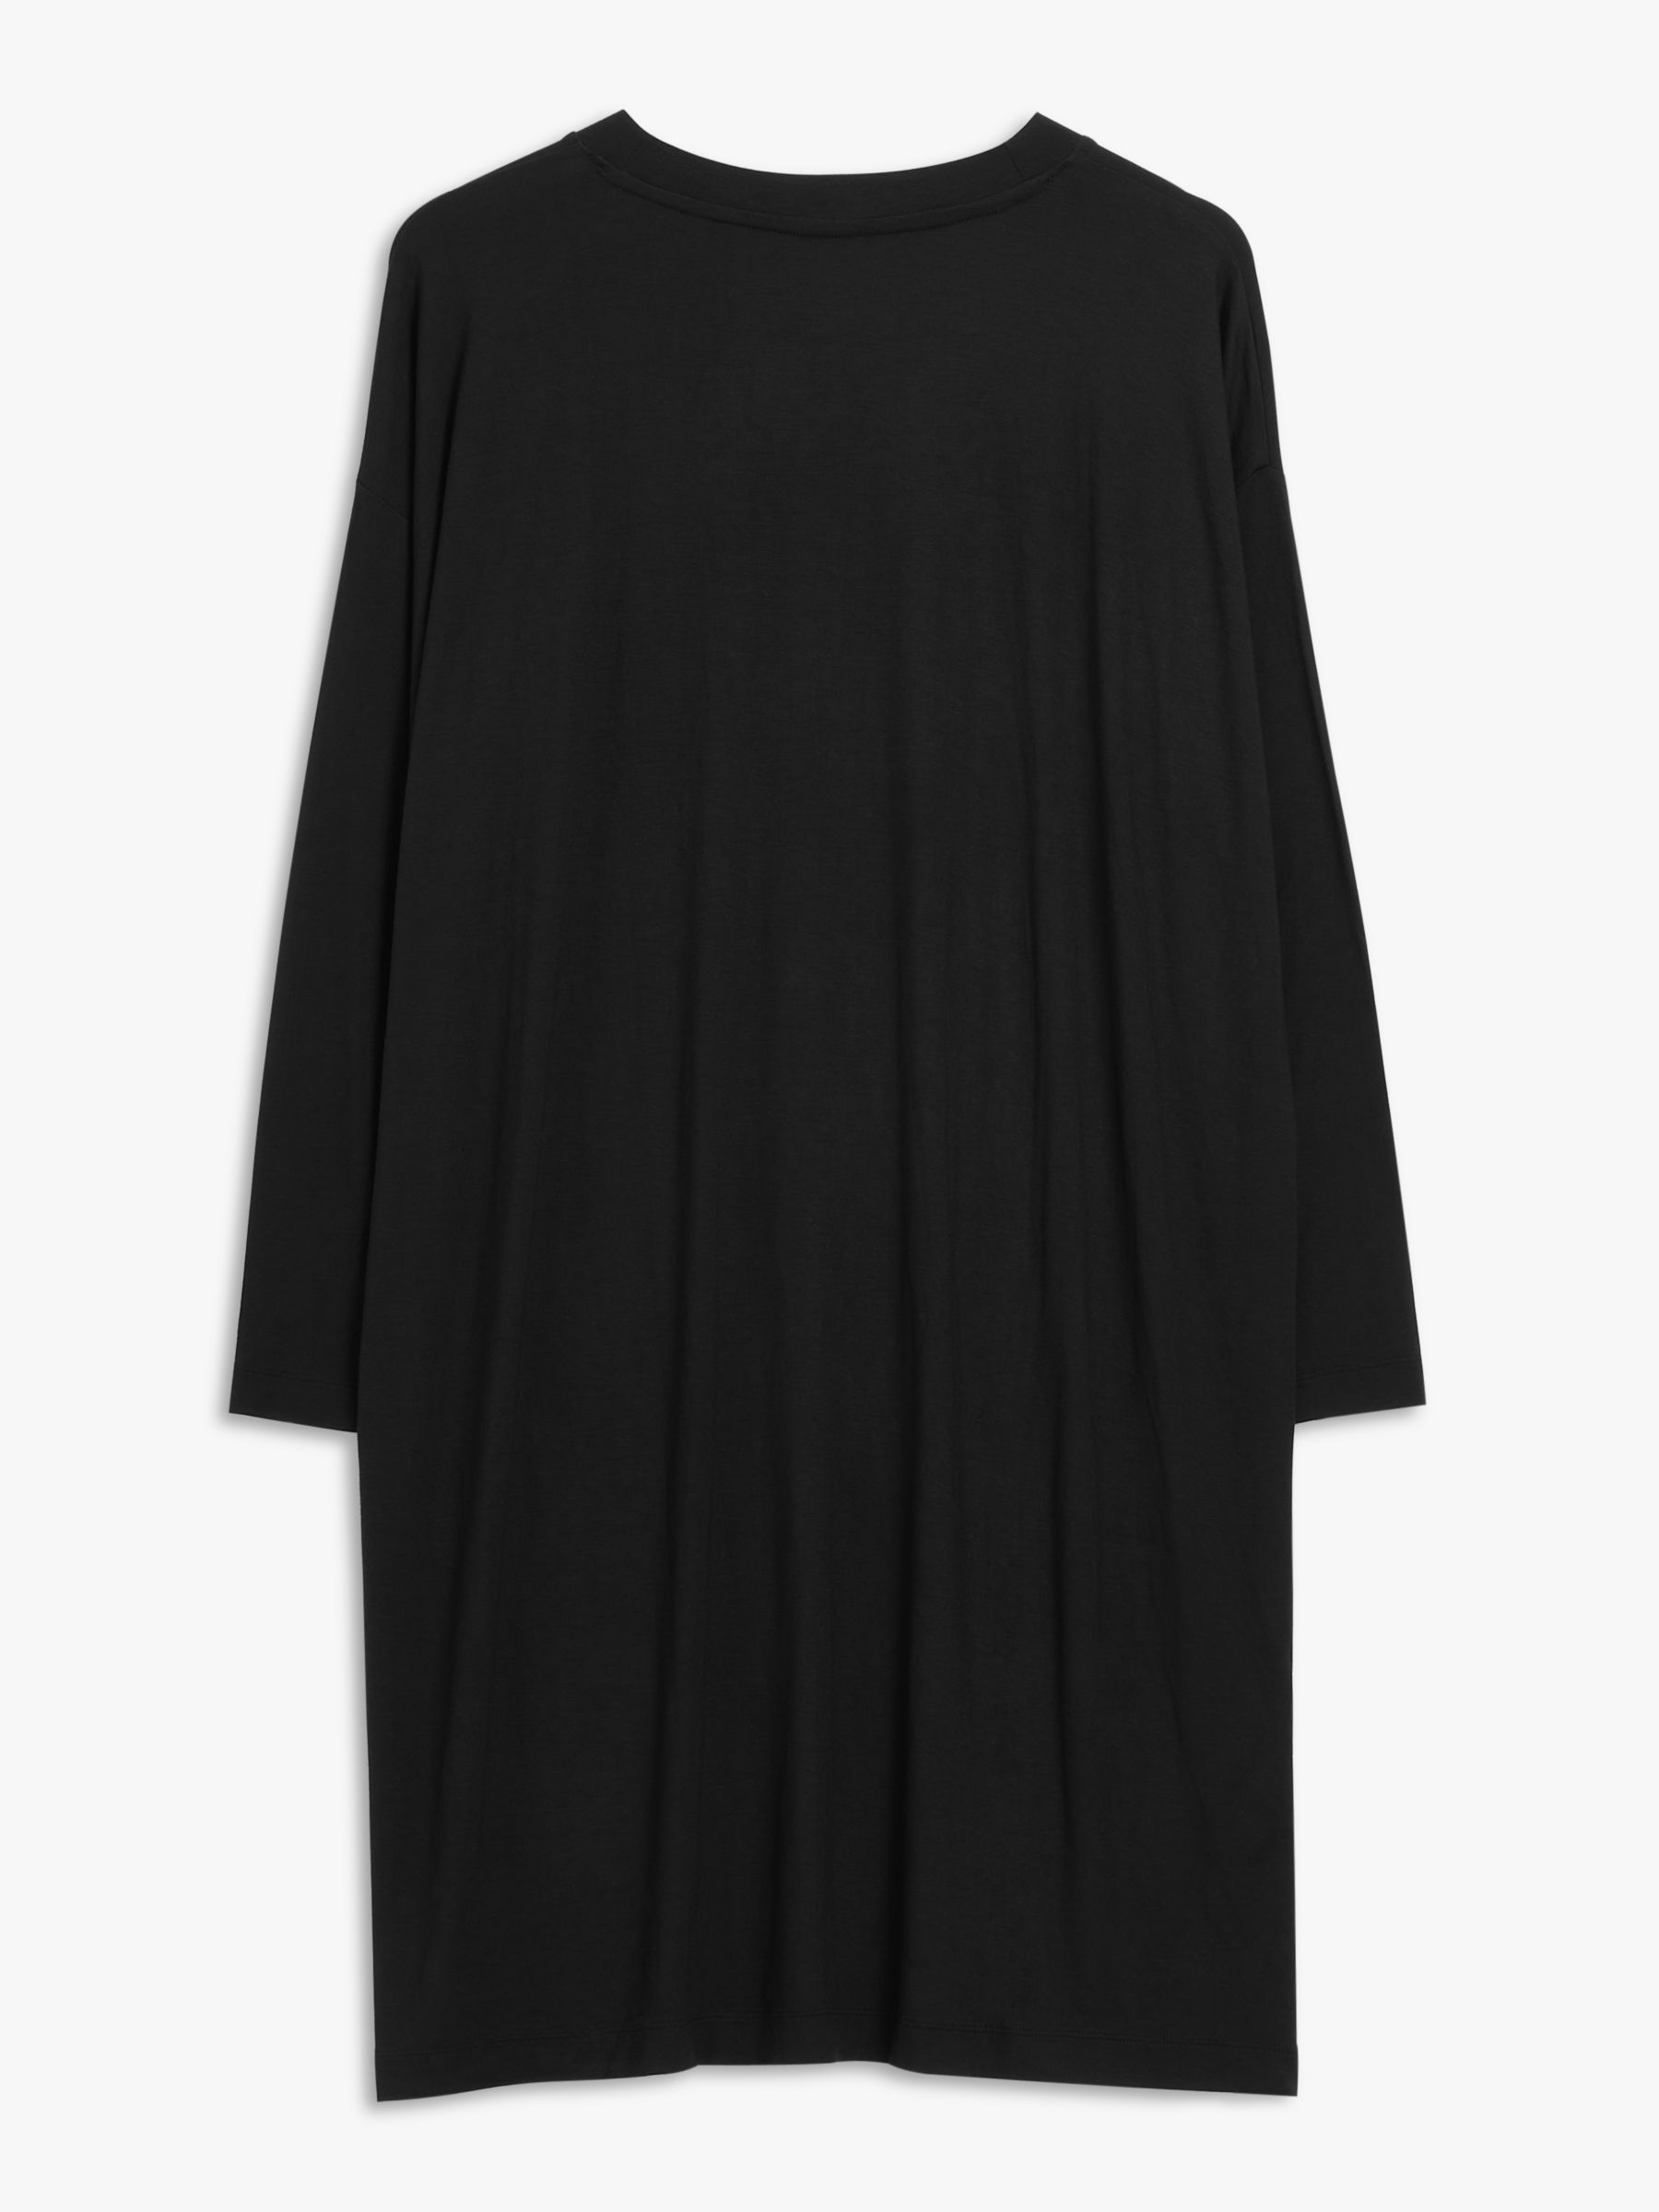 John Lewis ANYDAY Oversized Plain Jersey Dress, Black, XS